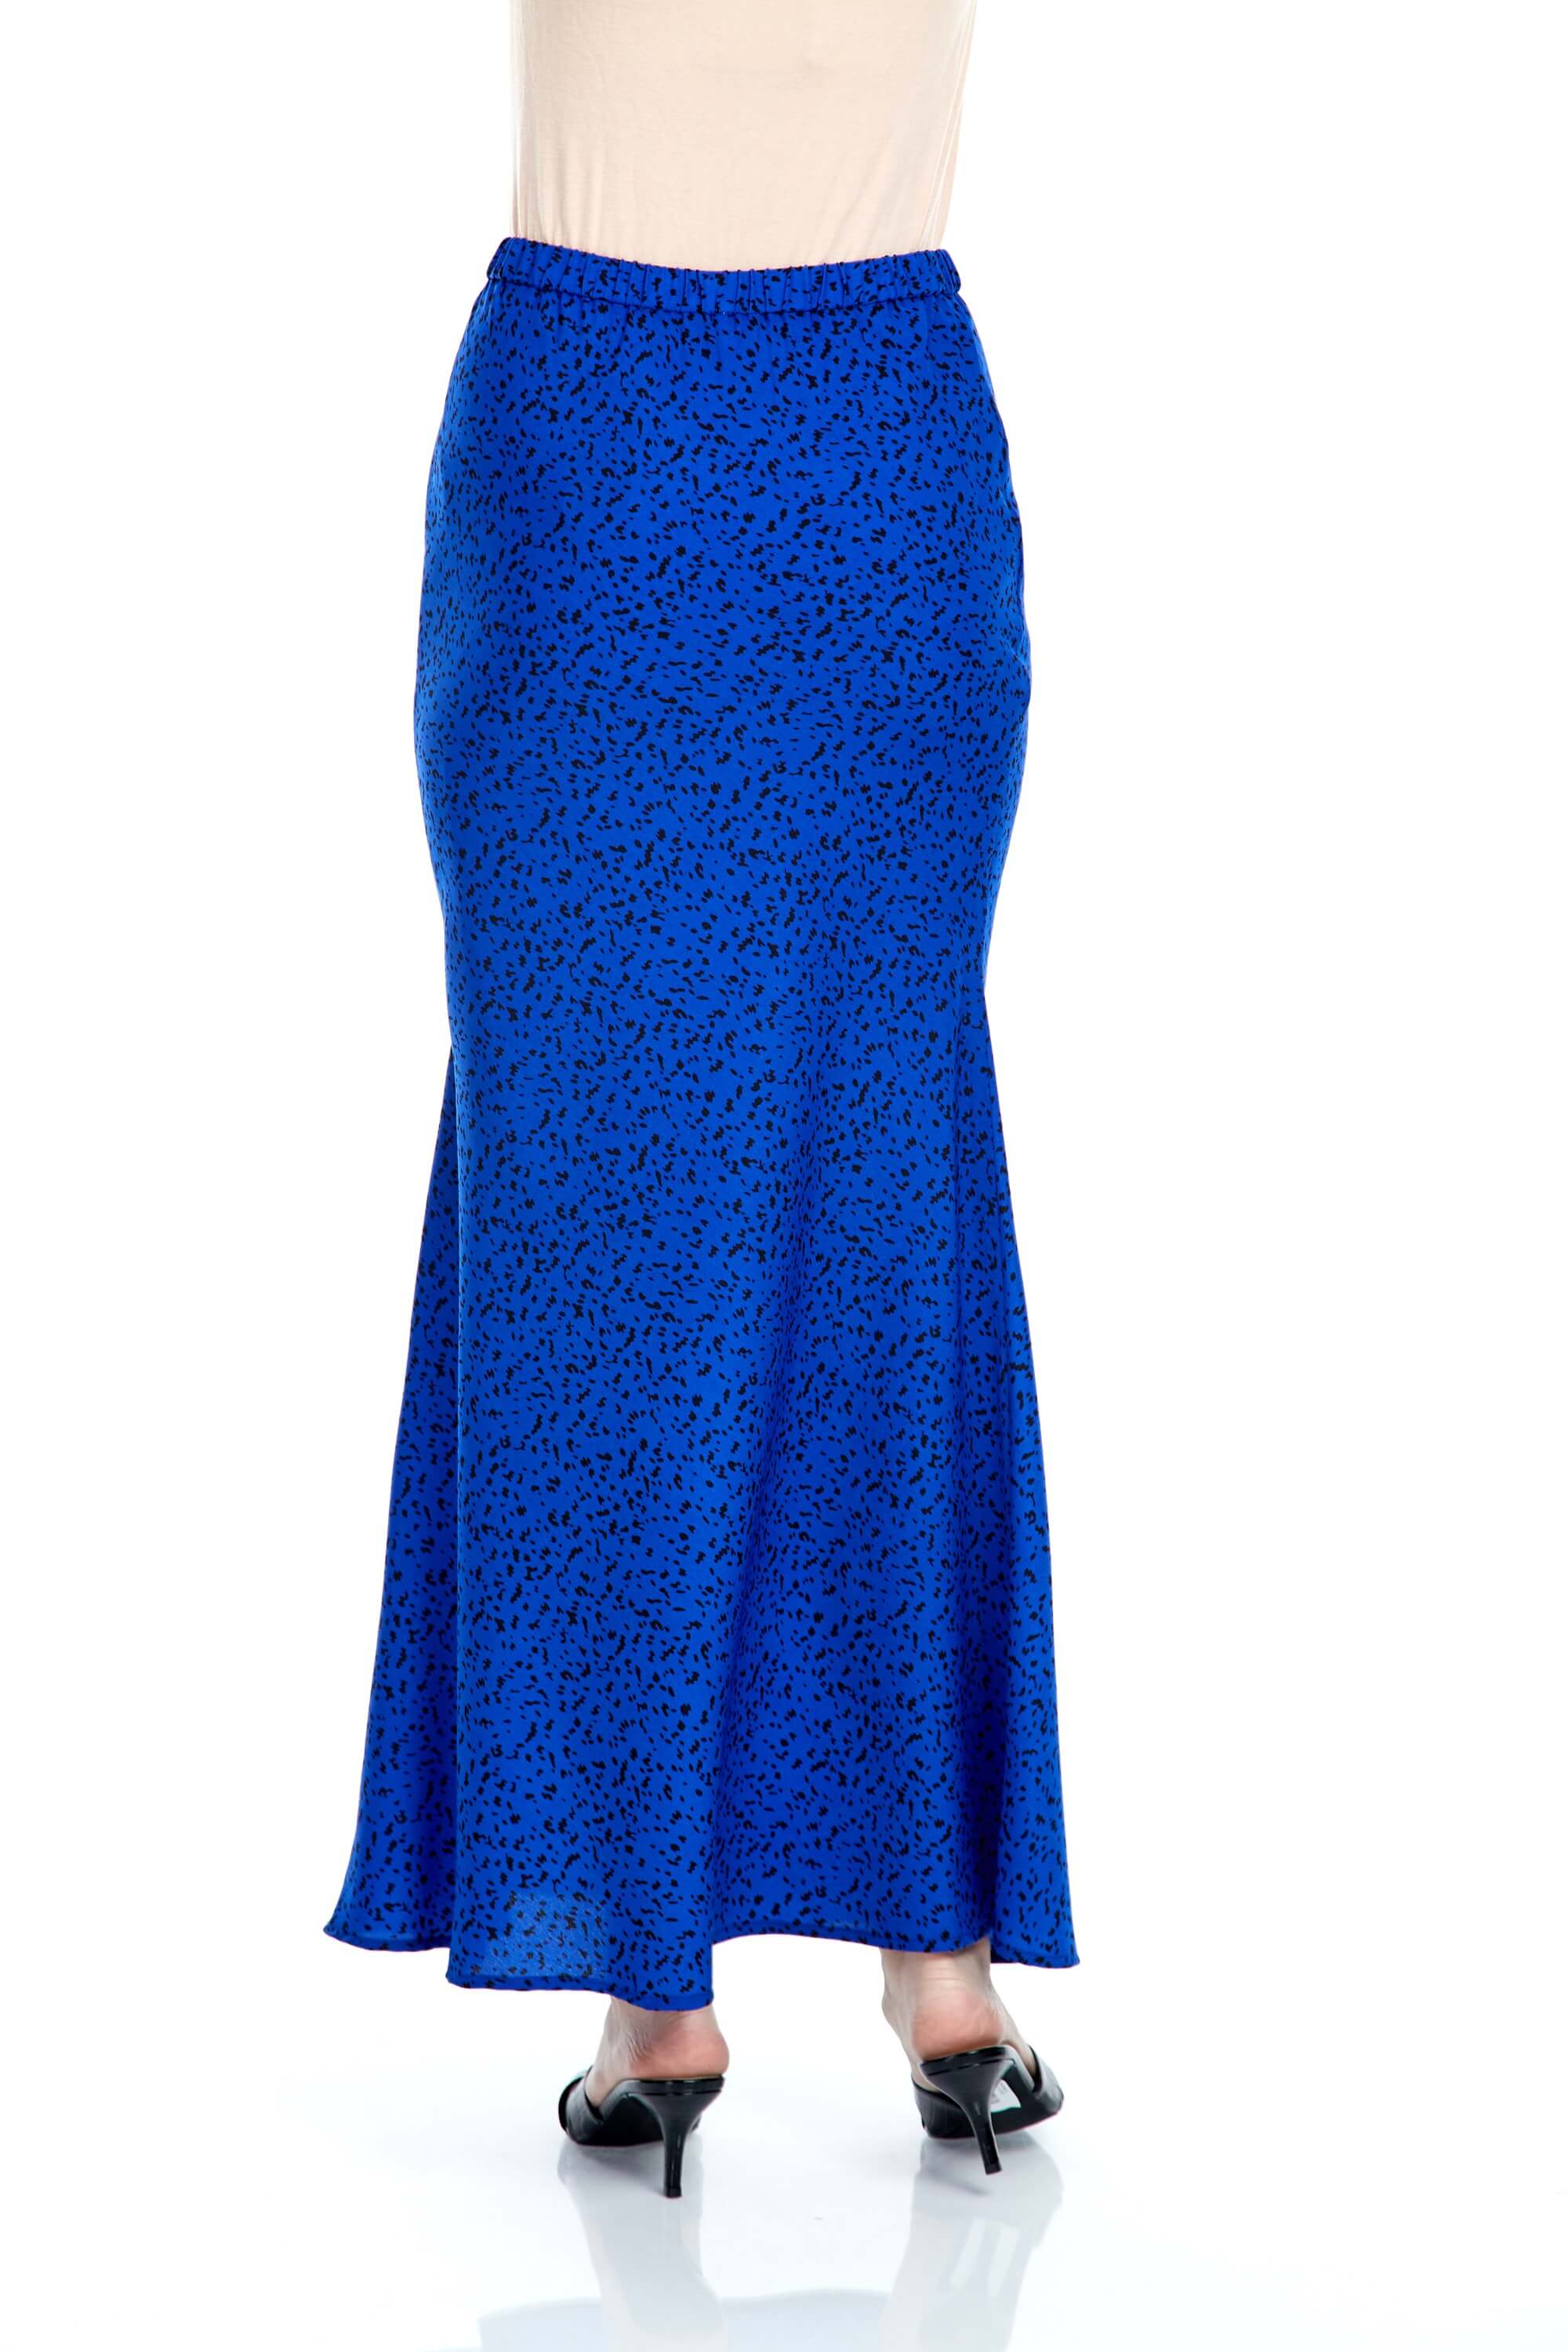 Tisha Royal Blue Spotted Skirt 3